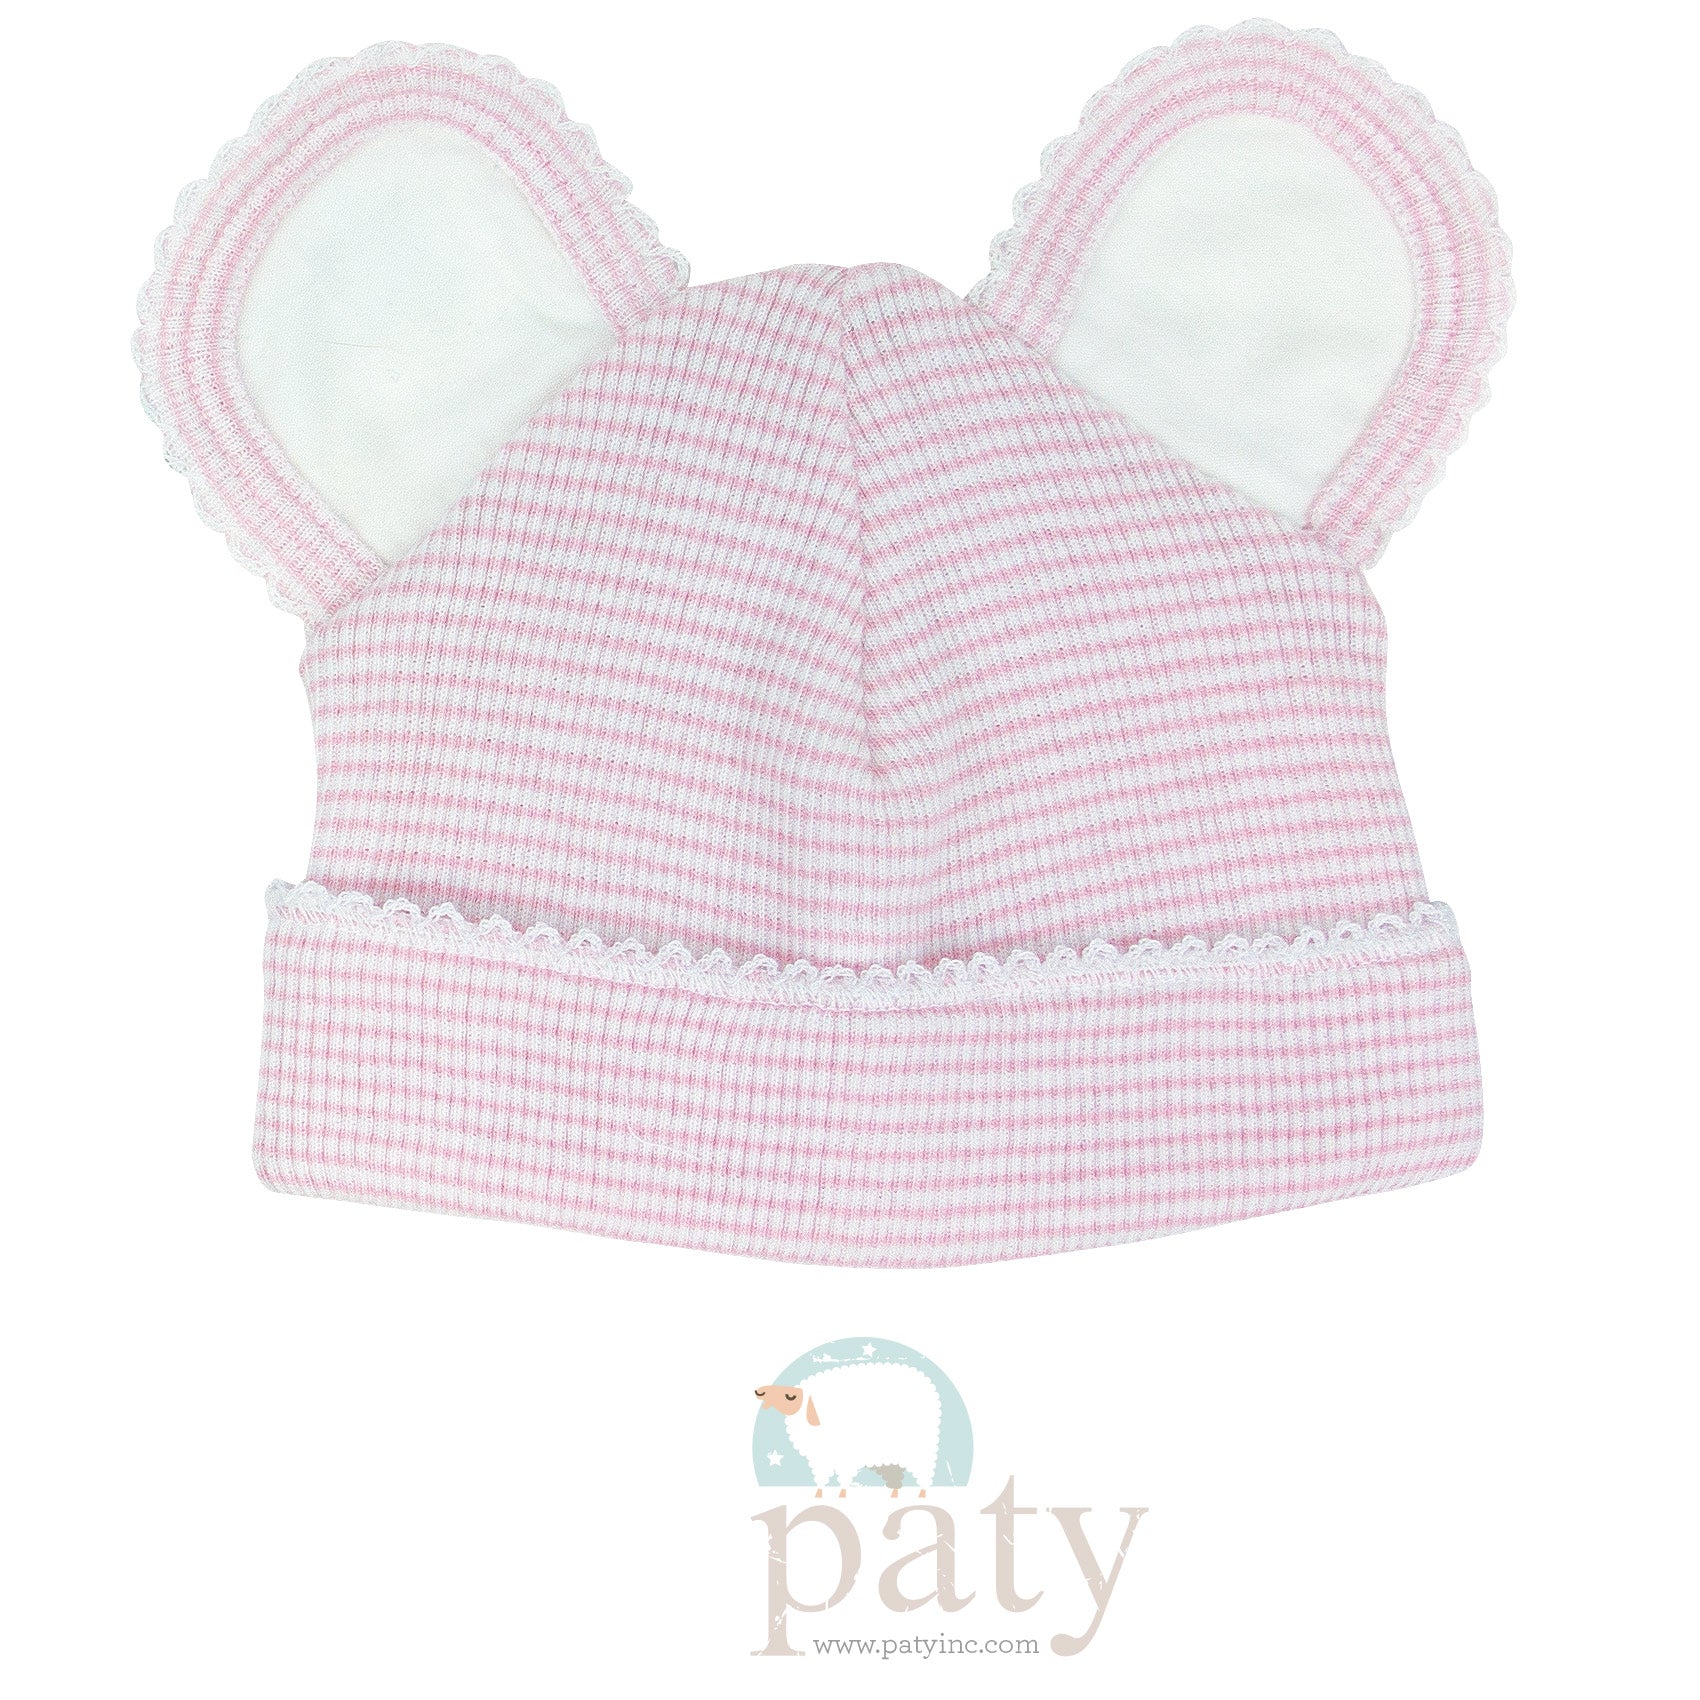 Paty Rib Knit Pink with White Trim Bear Cap